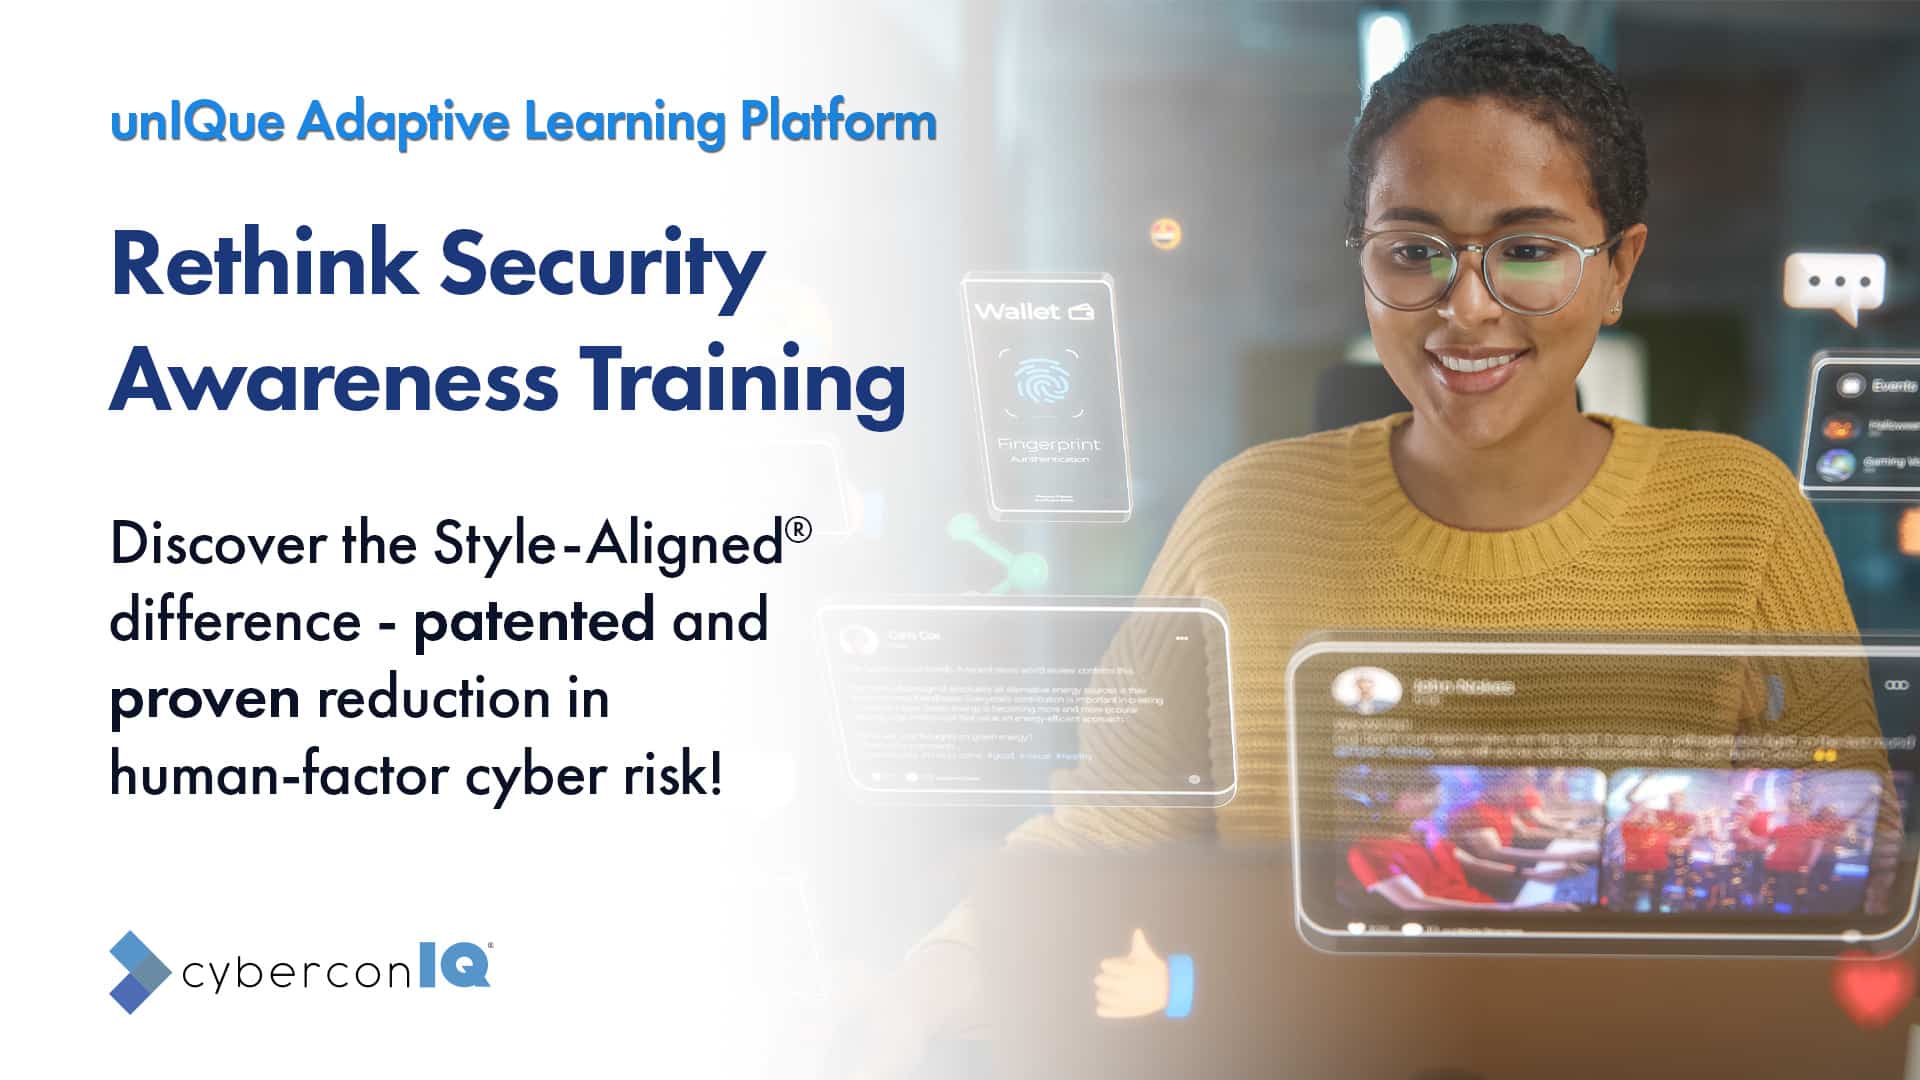 unIQue cyber awareness training platform